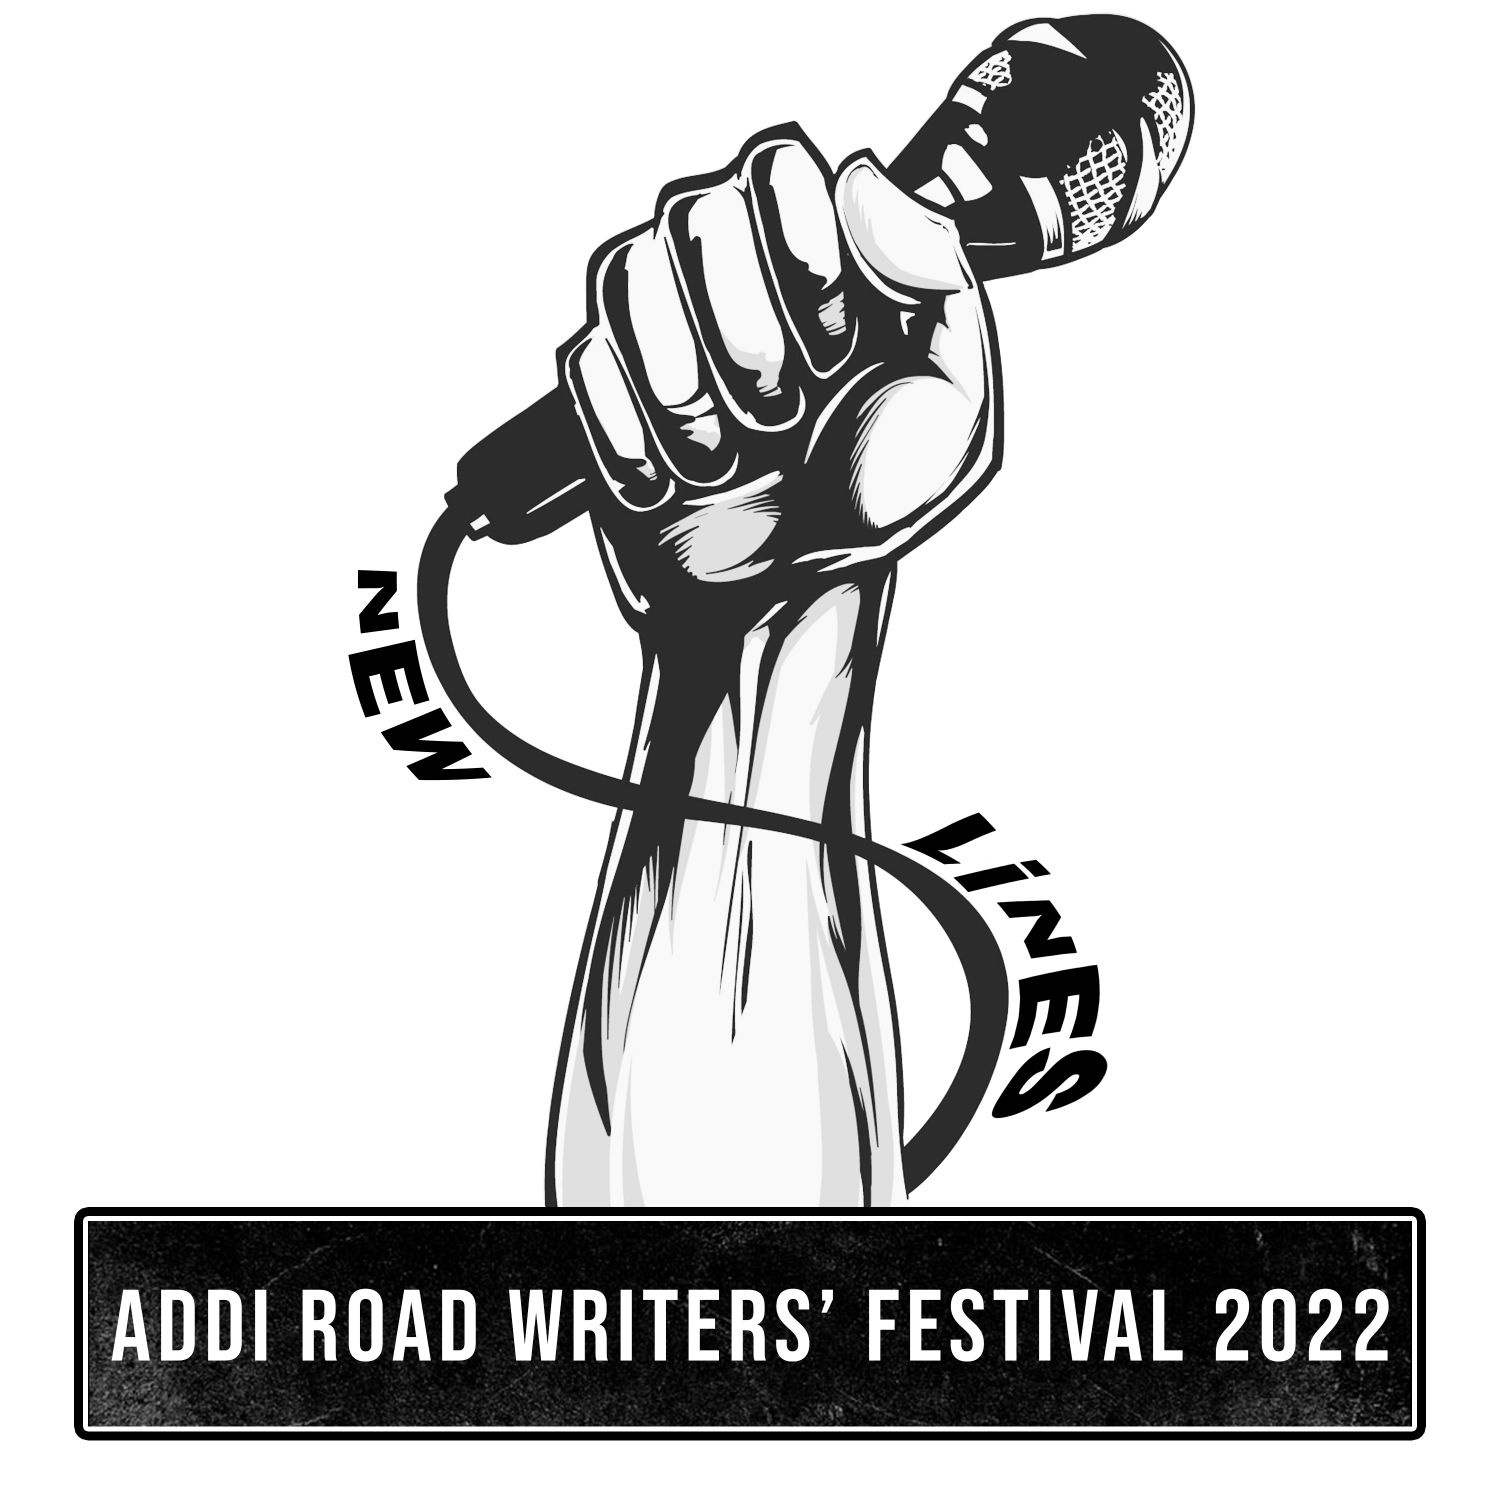 The Program – Addi Road Writers’ Festival 2022